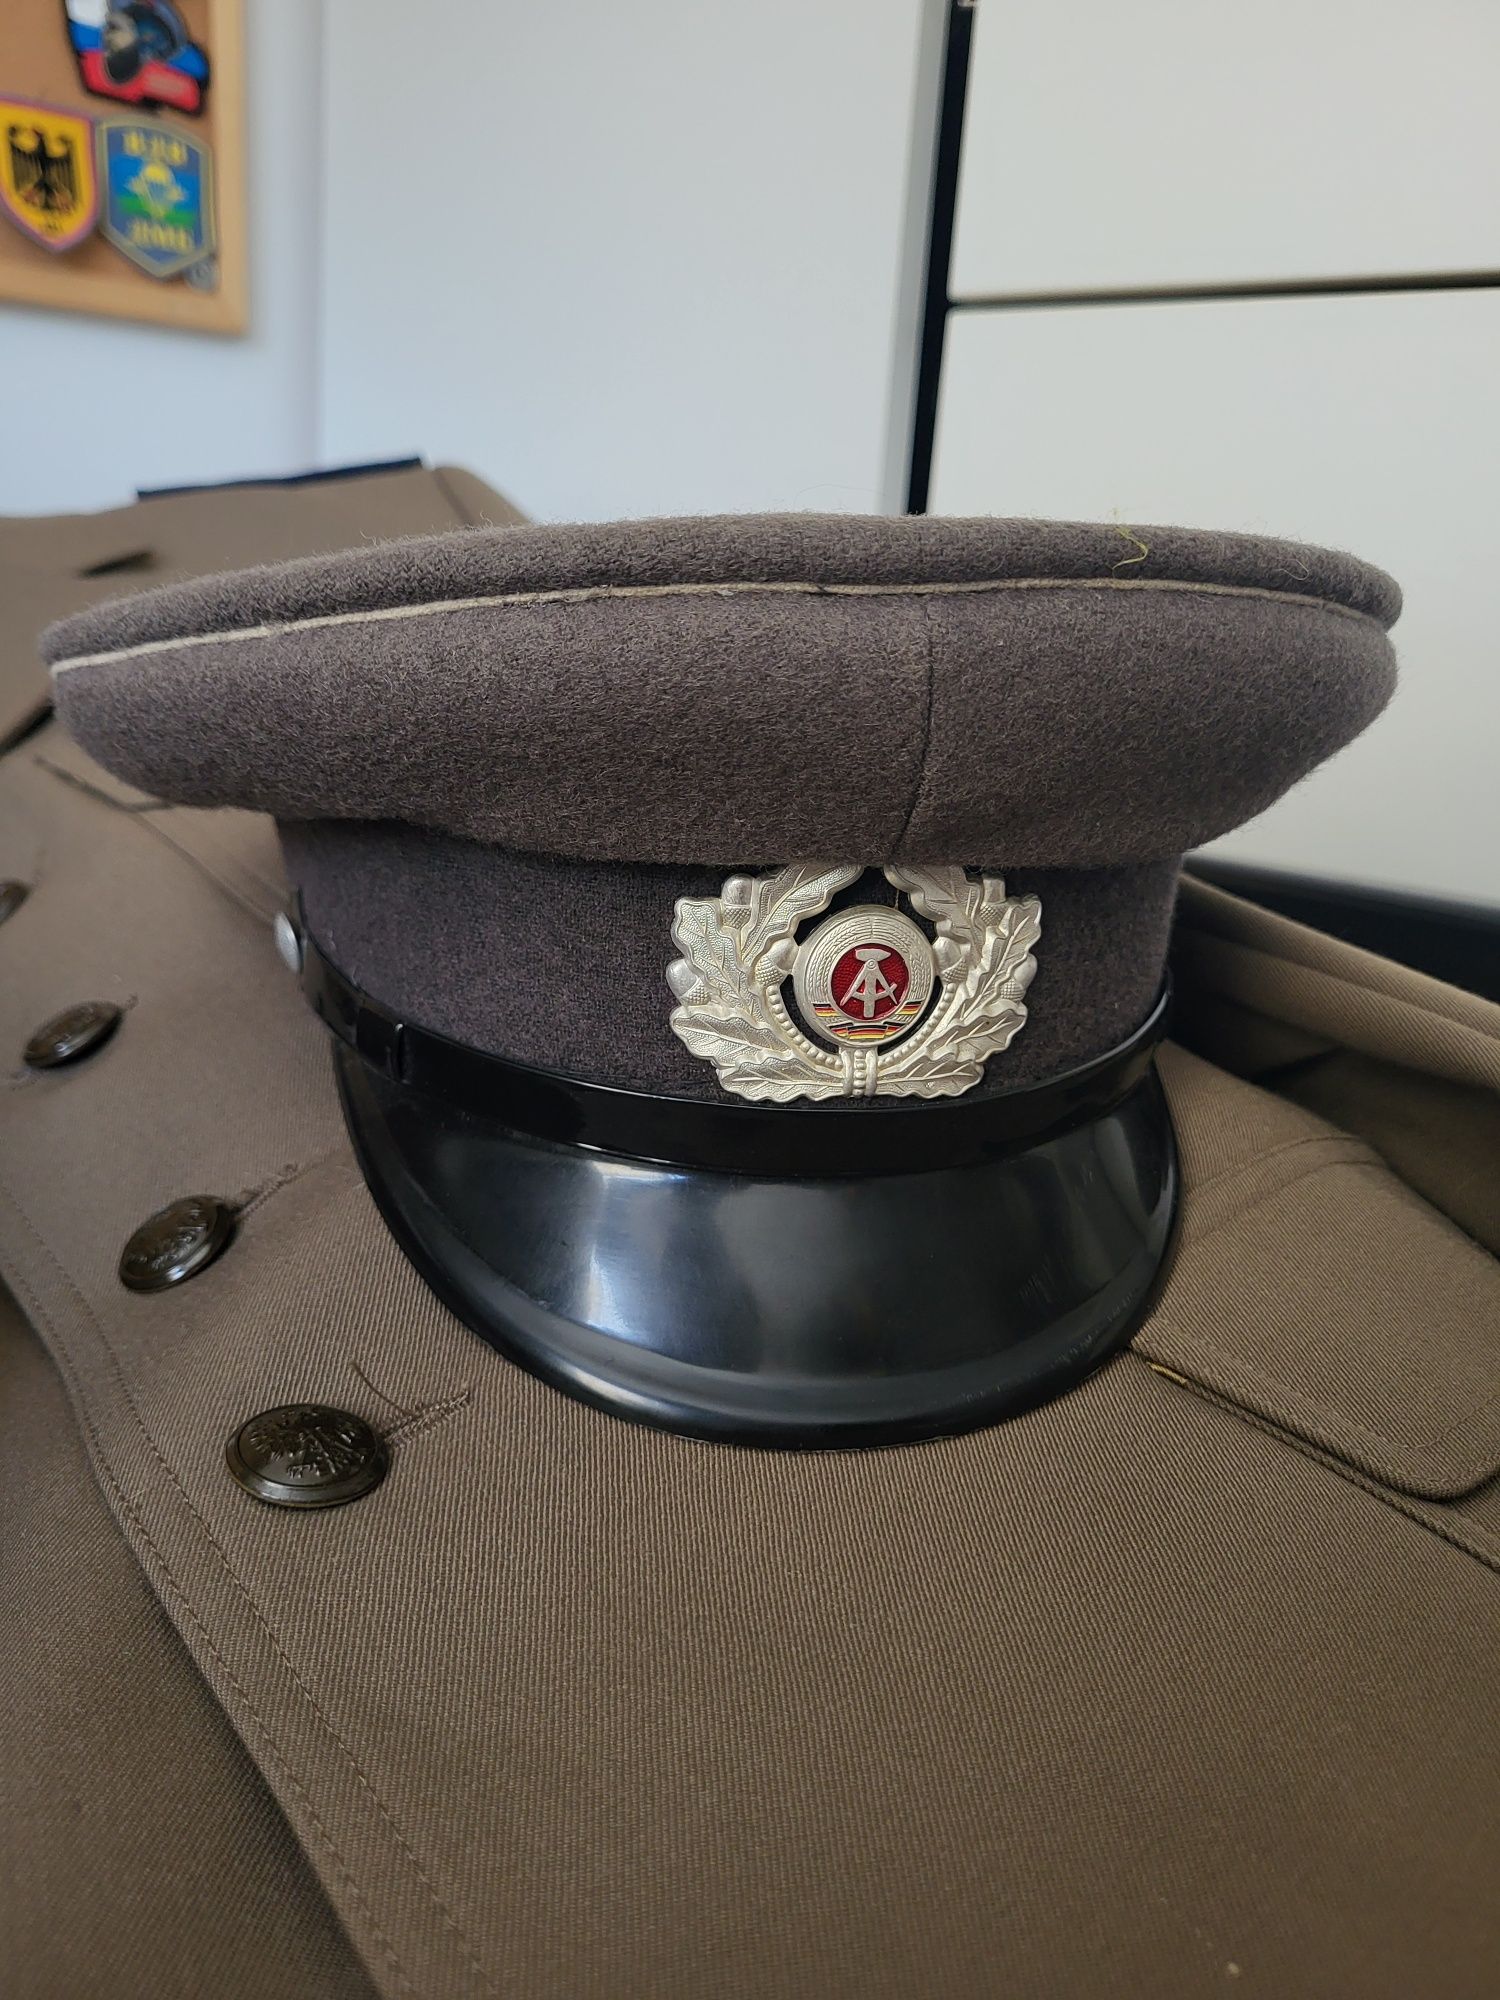 Mundur galowy oficera NVA + bluza polowa + czapka NVA